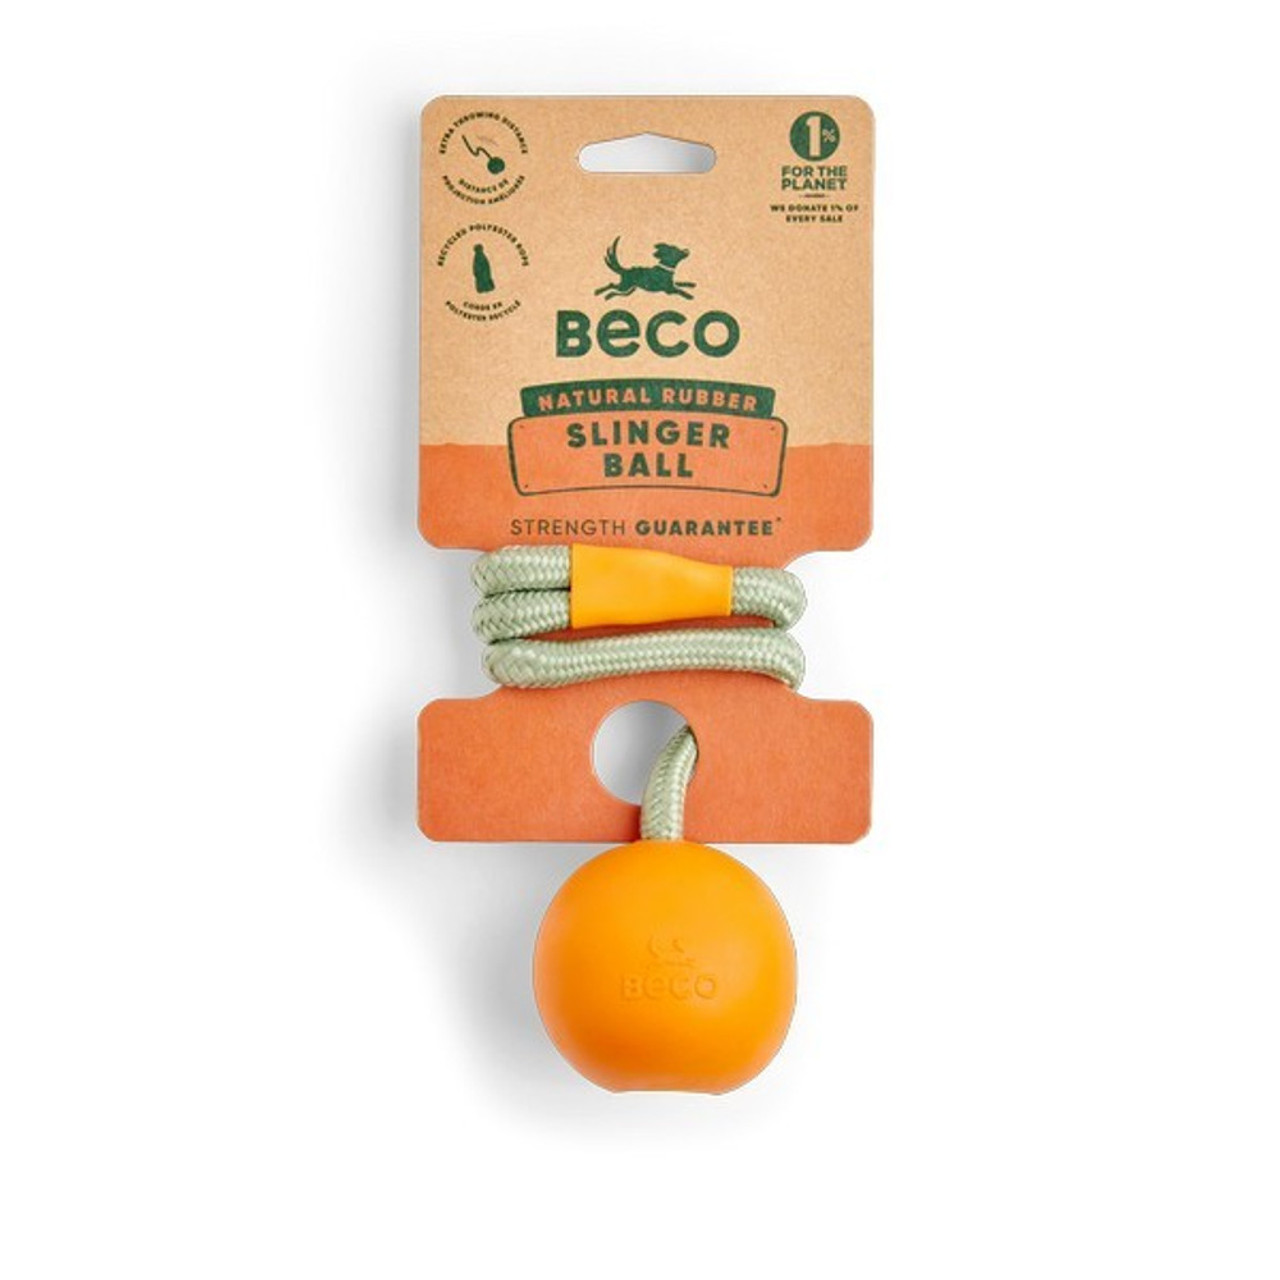 Beco Natural Rubber Slinger Toy for Fetch